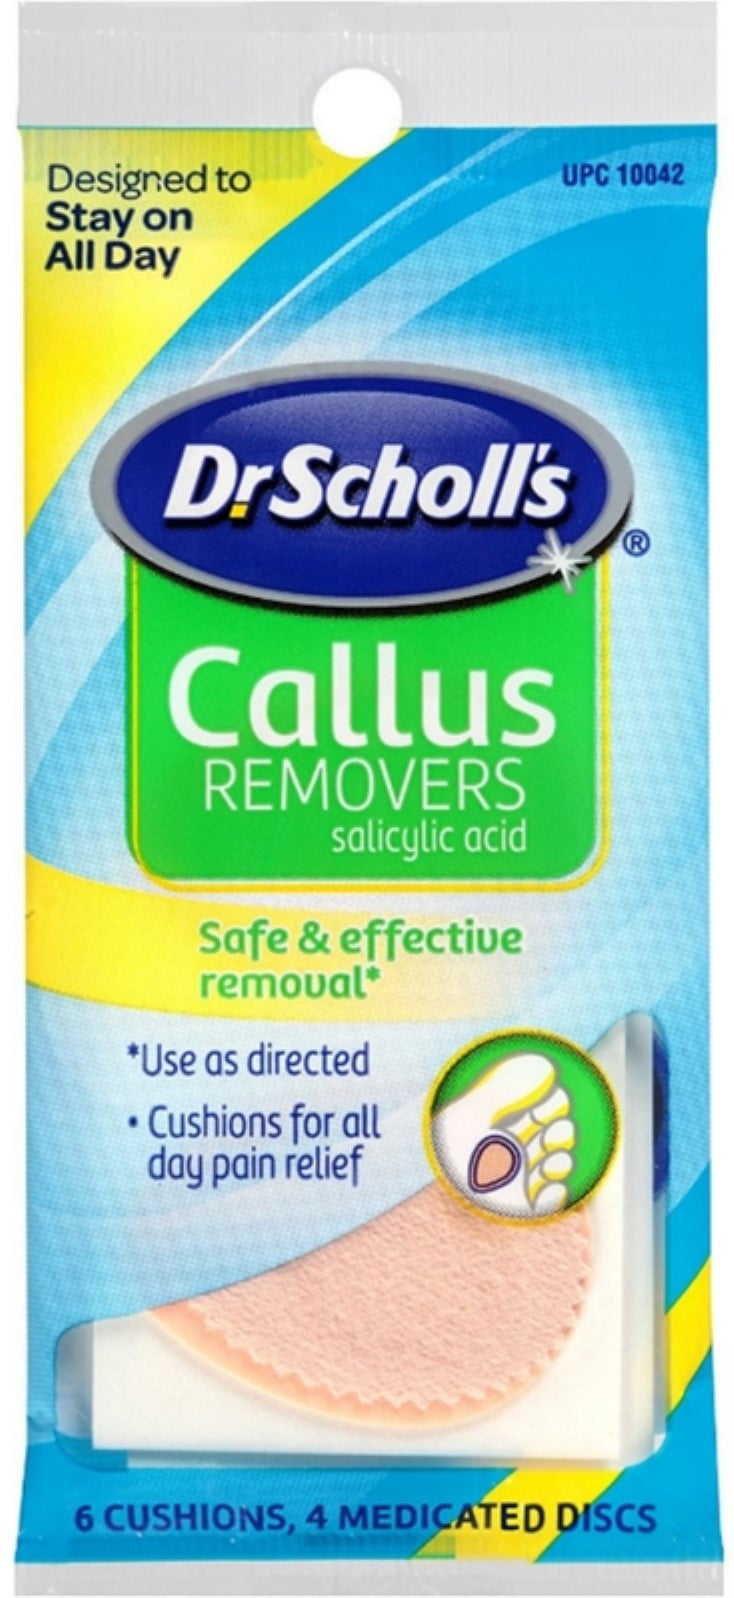 dr scholl's callus remover walmart